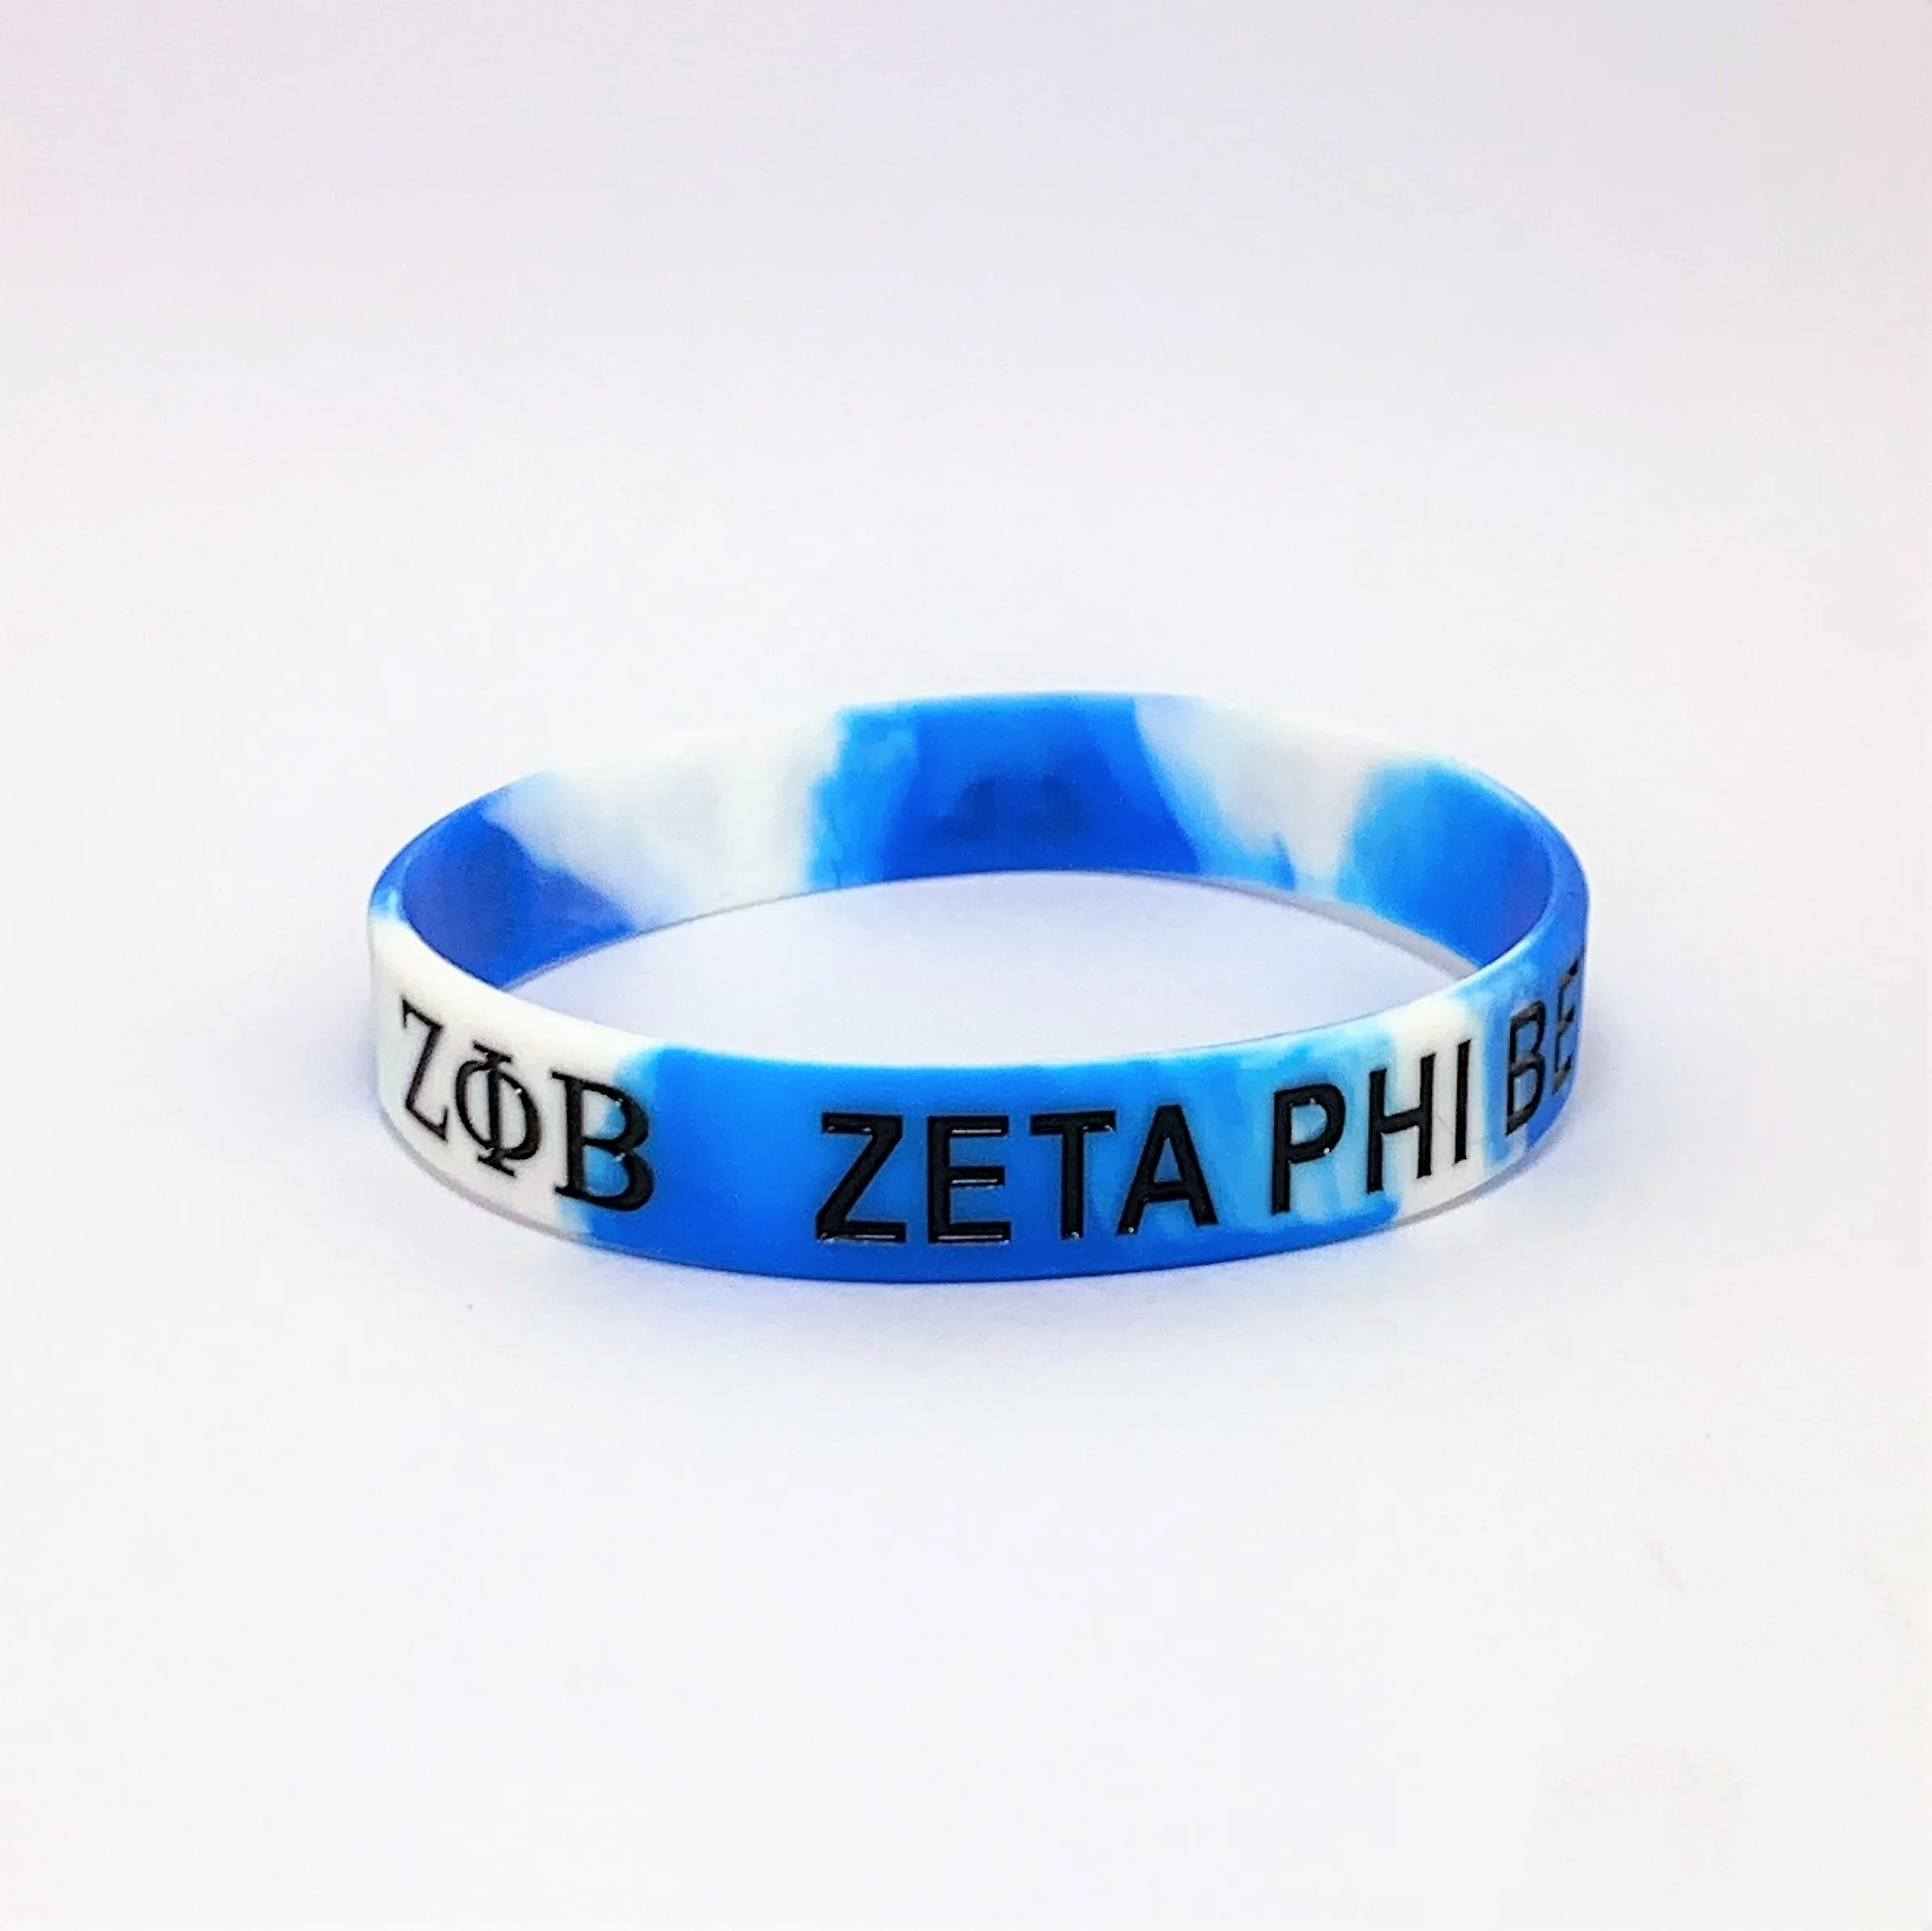 

Wholesale Personalized Zeta Phi Beta Silicone Bracelet With Cuff Bracelet, Pantone color